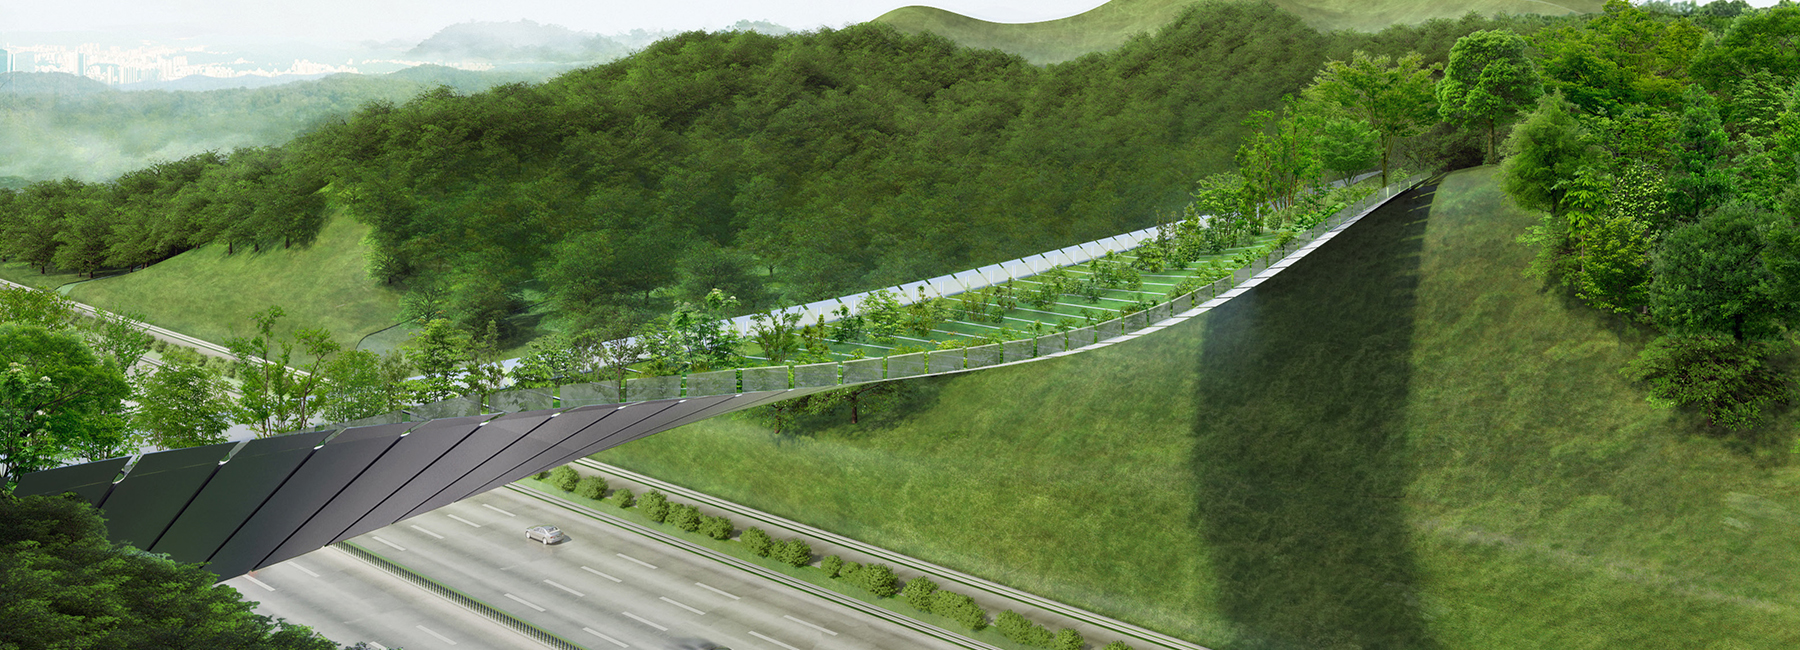 yangjaegogae eco bridge winners propose a link between urban living and korean wildlife